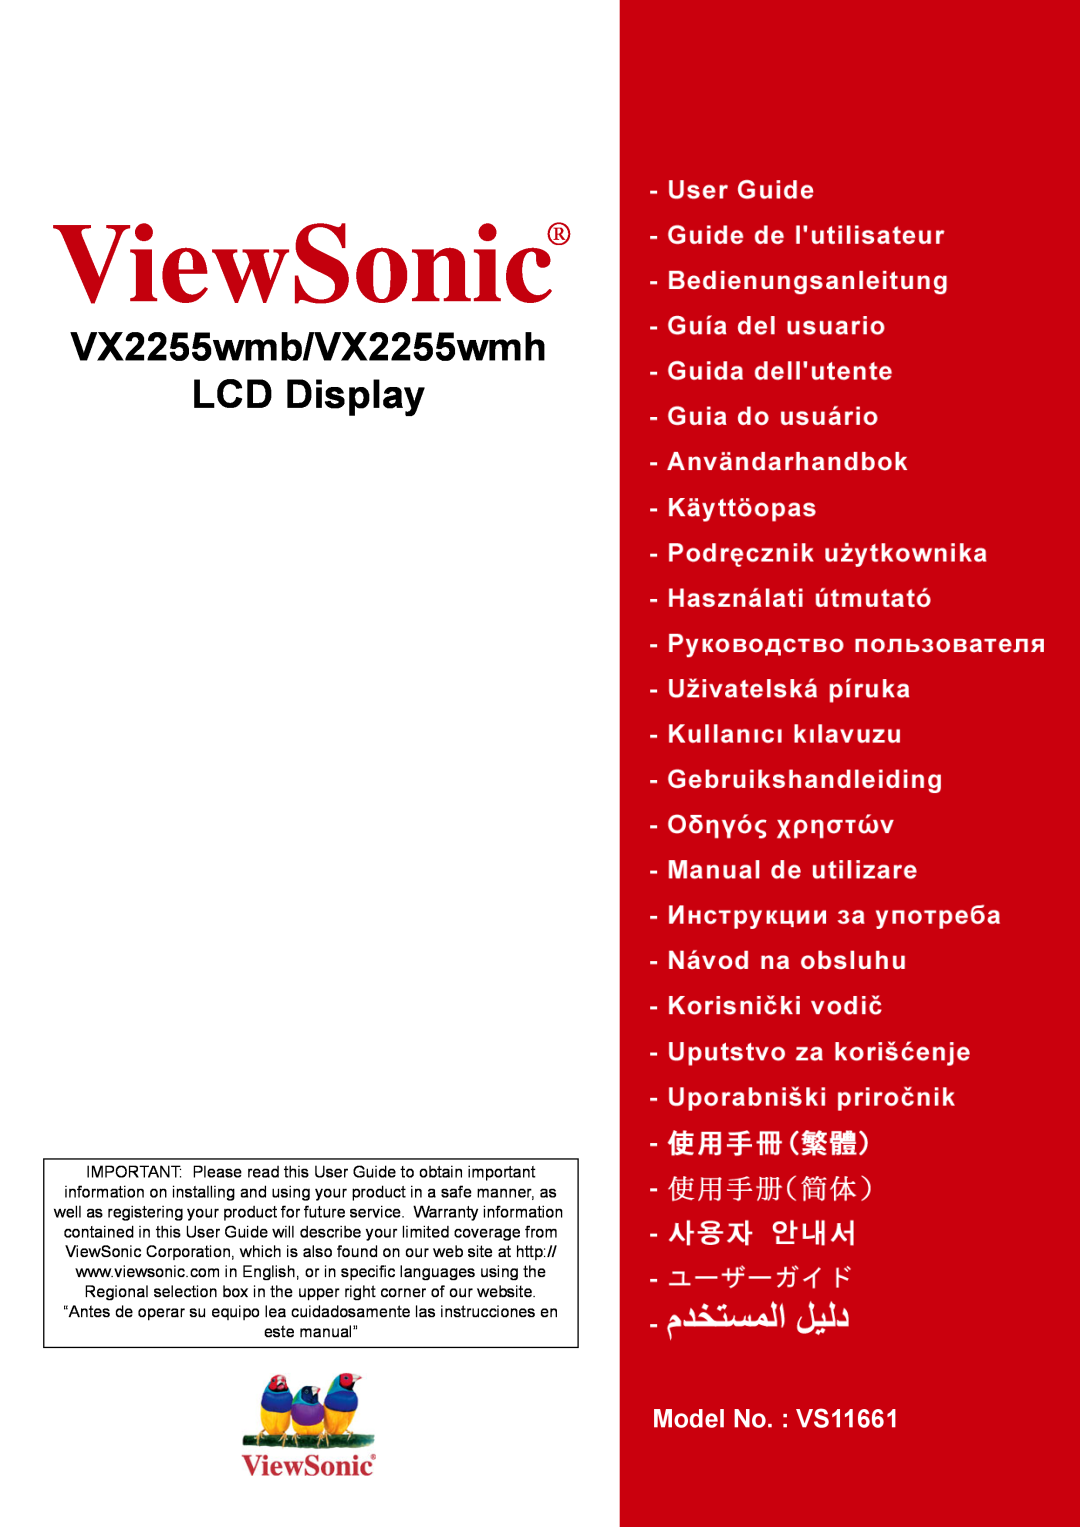 ViewSonic warranty ViewSonic, VX2255wmb/VX2255wmh LCD Display, Model No. VS11661 